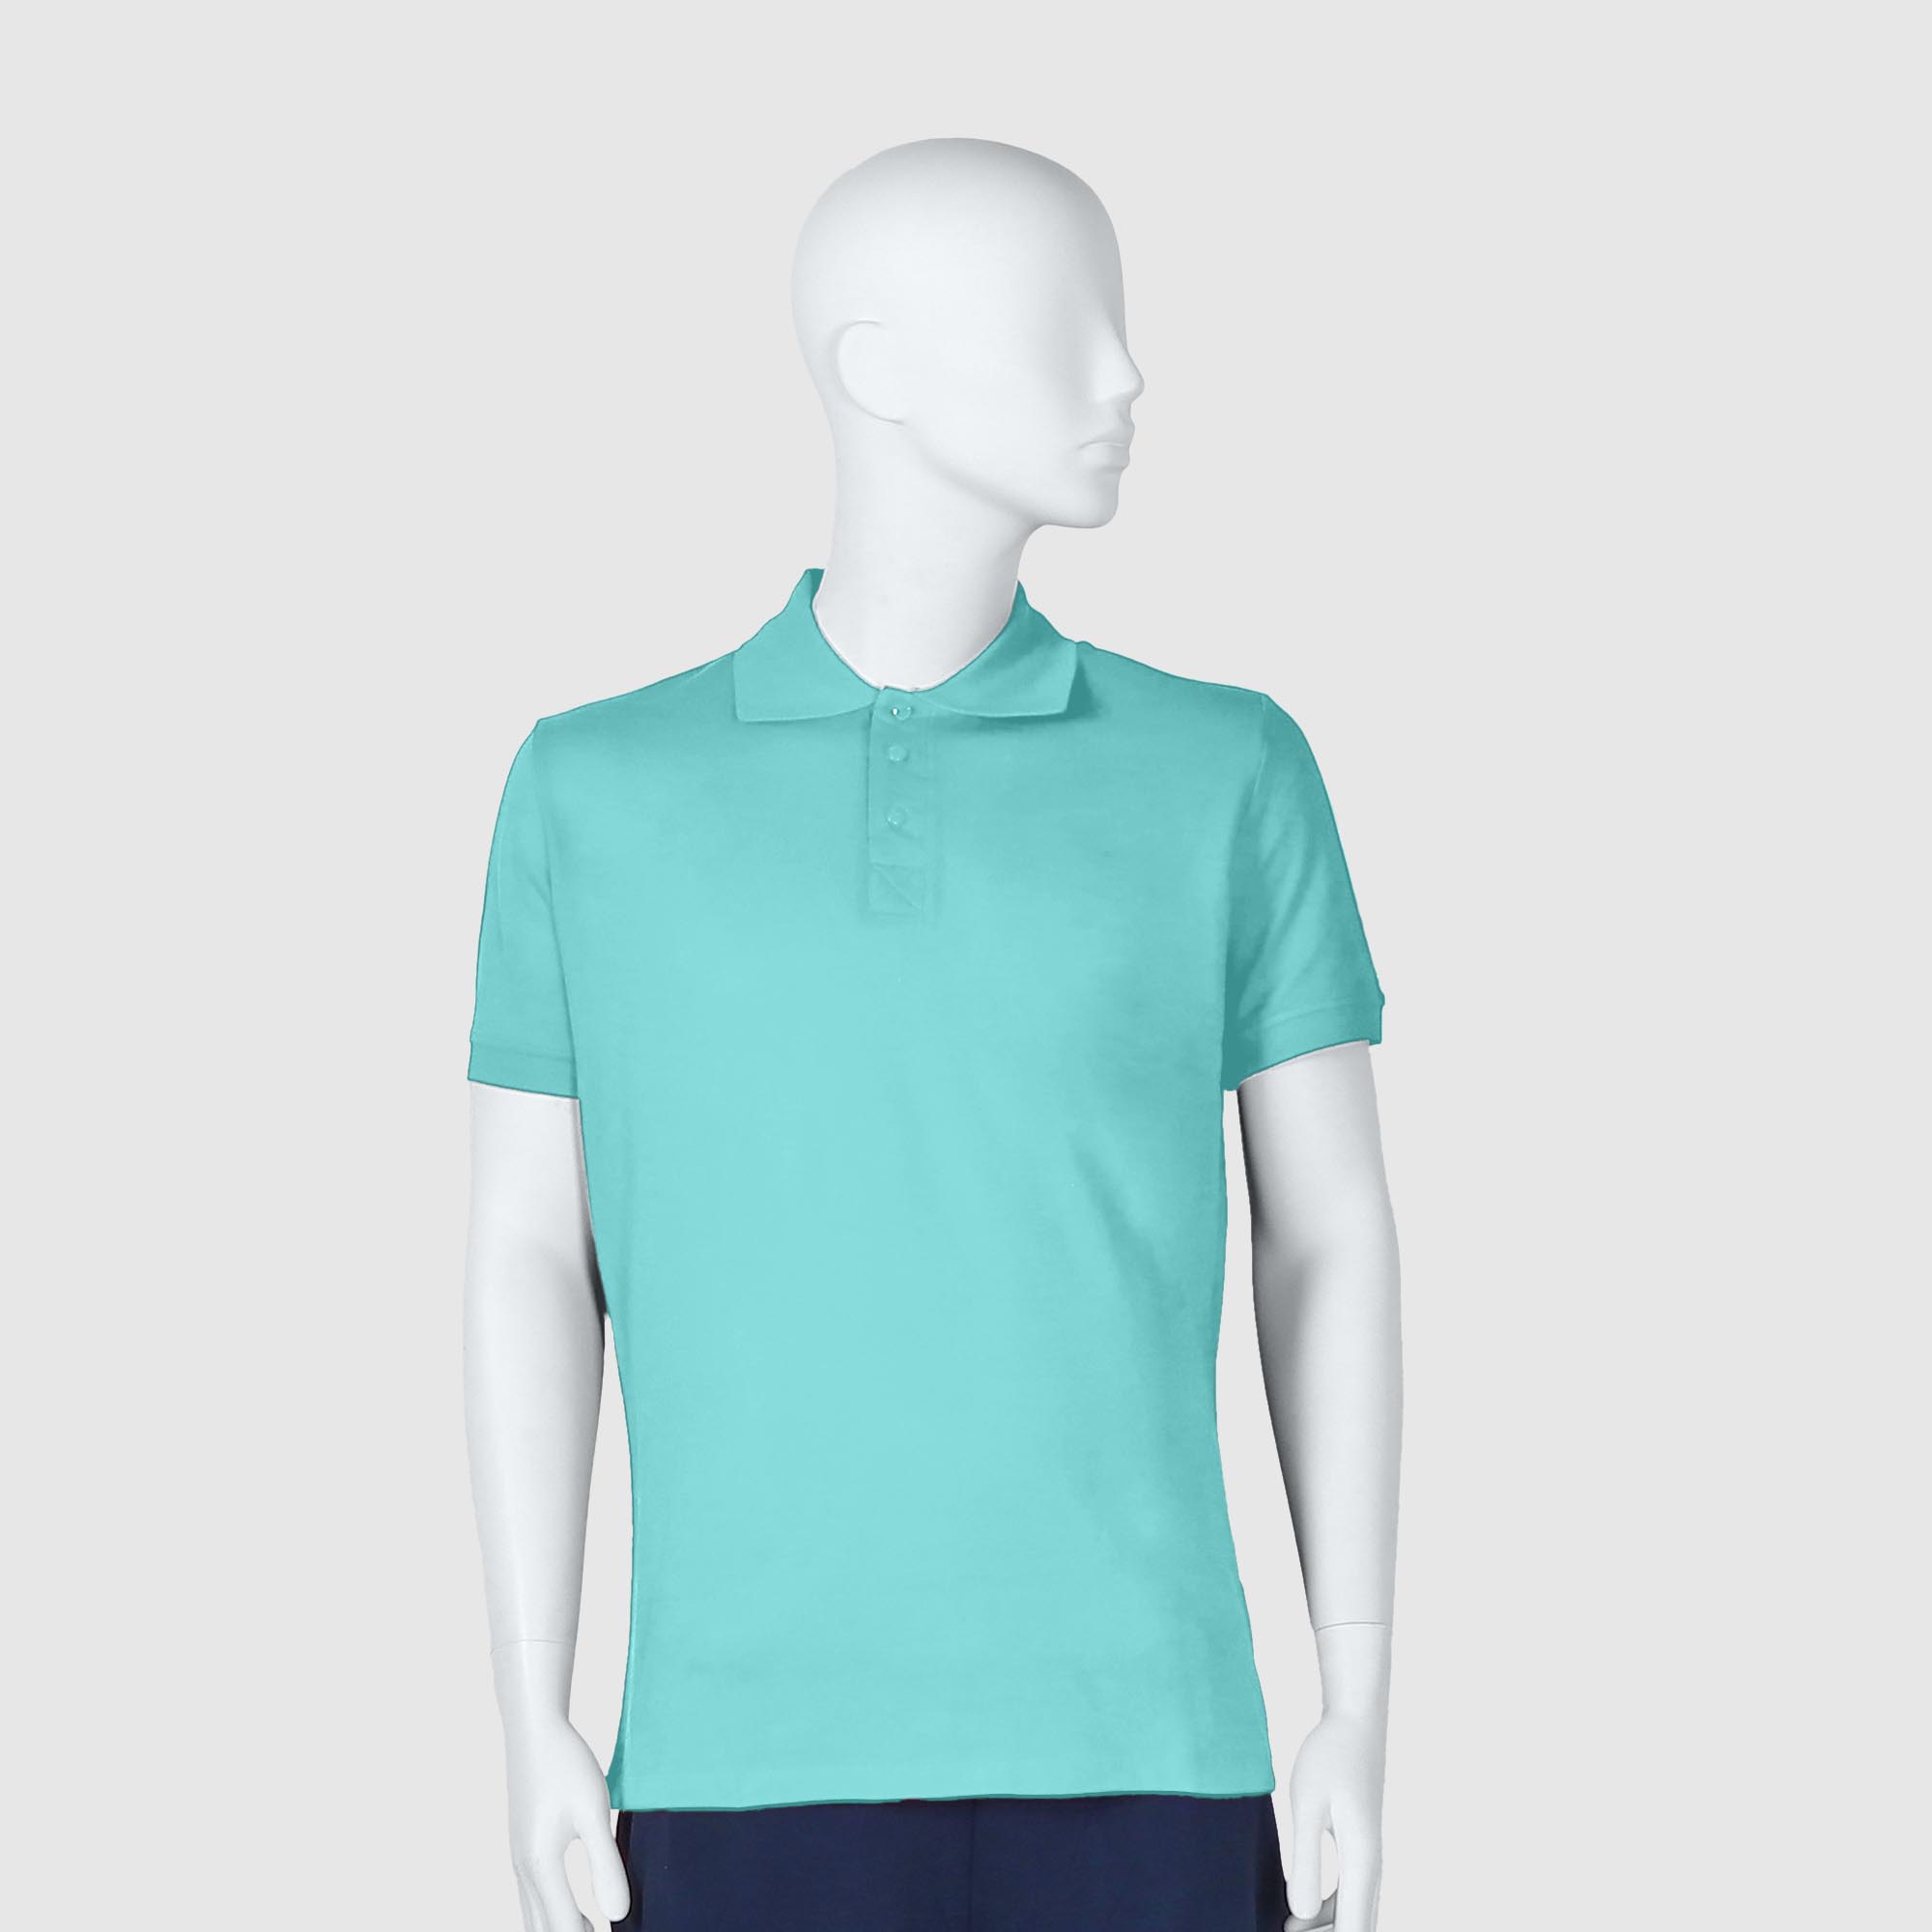 Мужская футболка-поло Diva Teks лазурная (DTD-12), цвет лазурный, размер 46-48 - фото 1